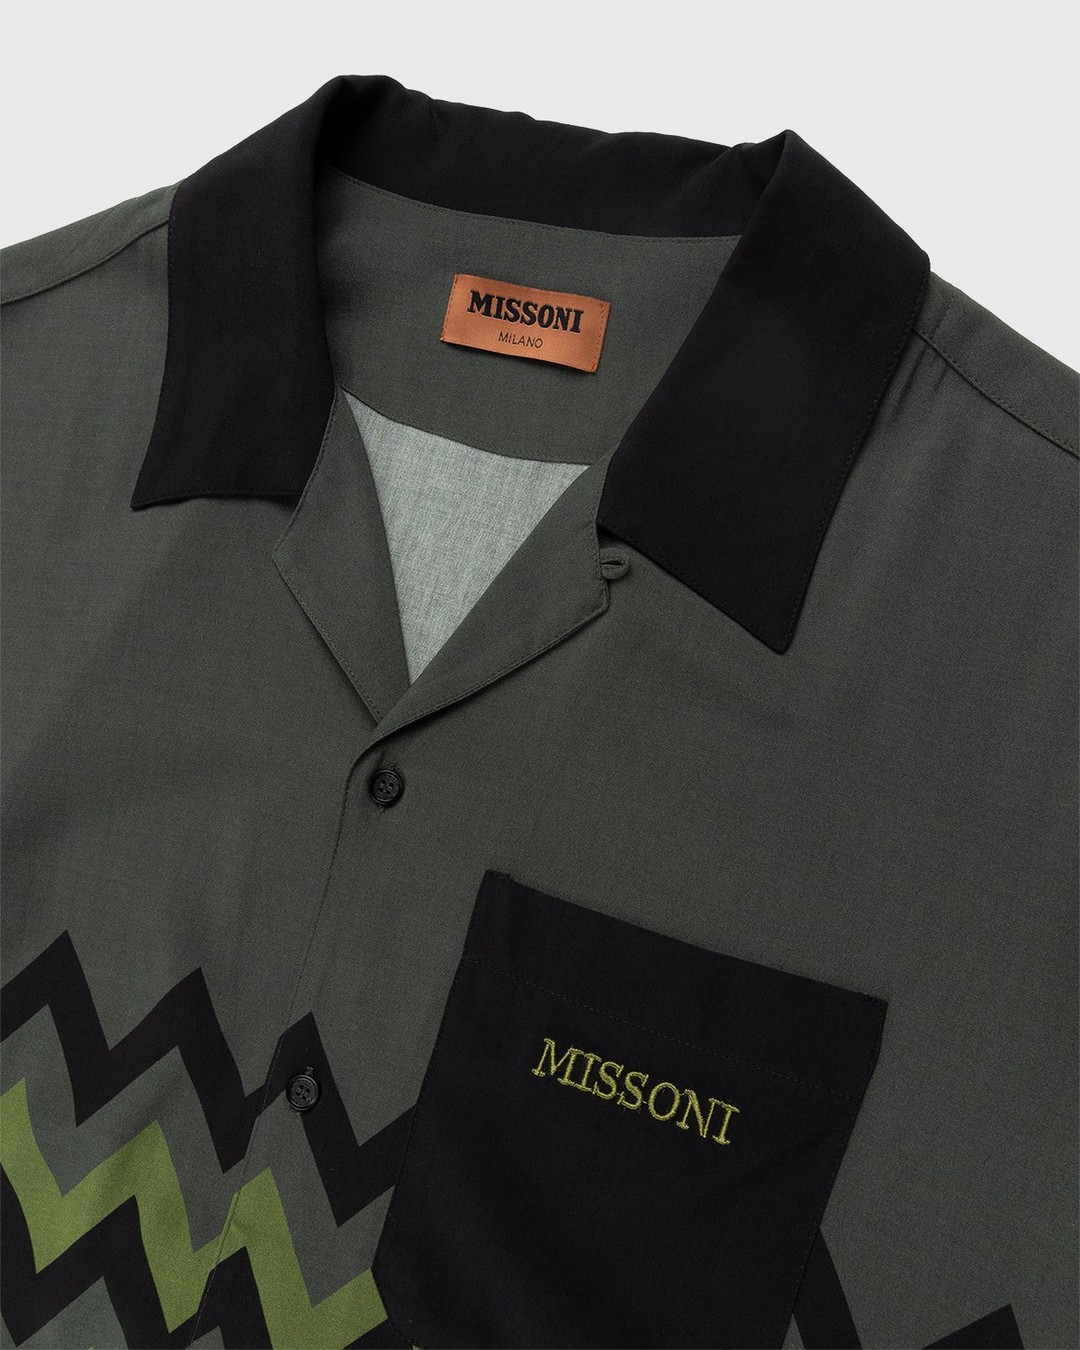 Missoni – Zig Zag Camp Shirt Green - T-shirts - Multi - Image 4